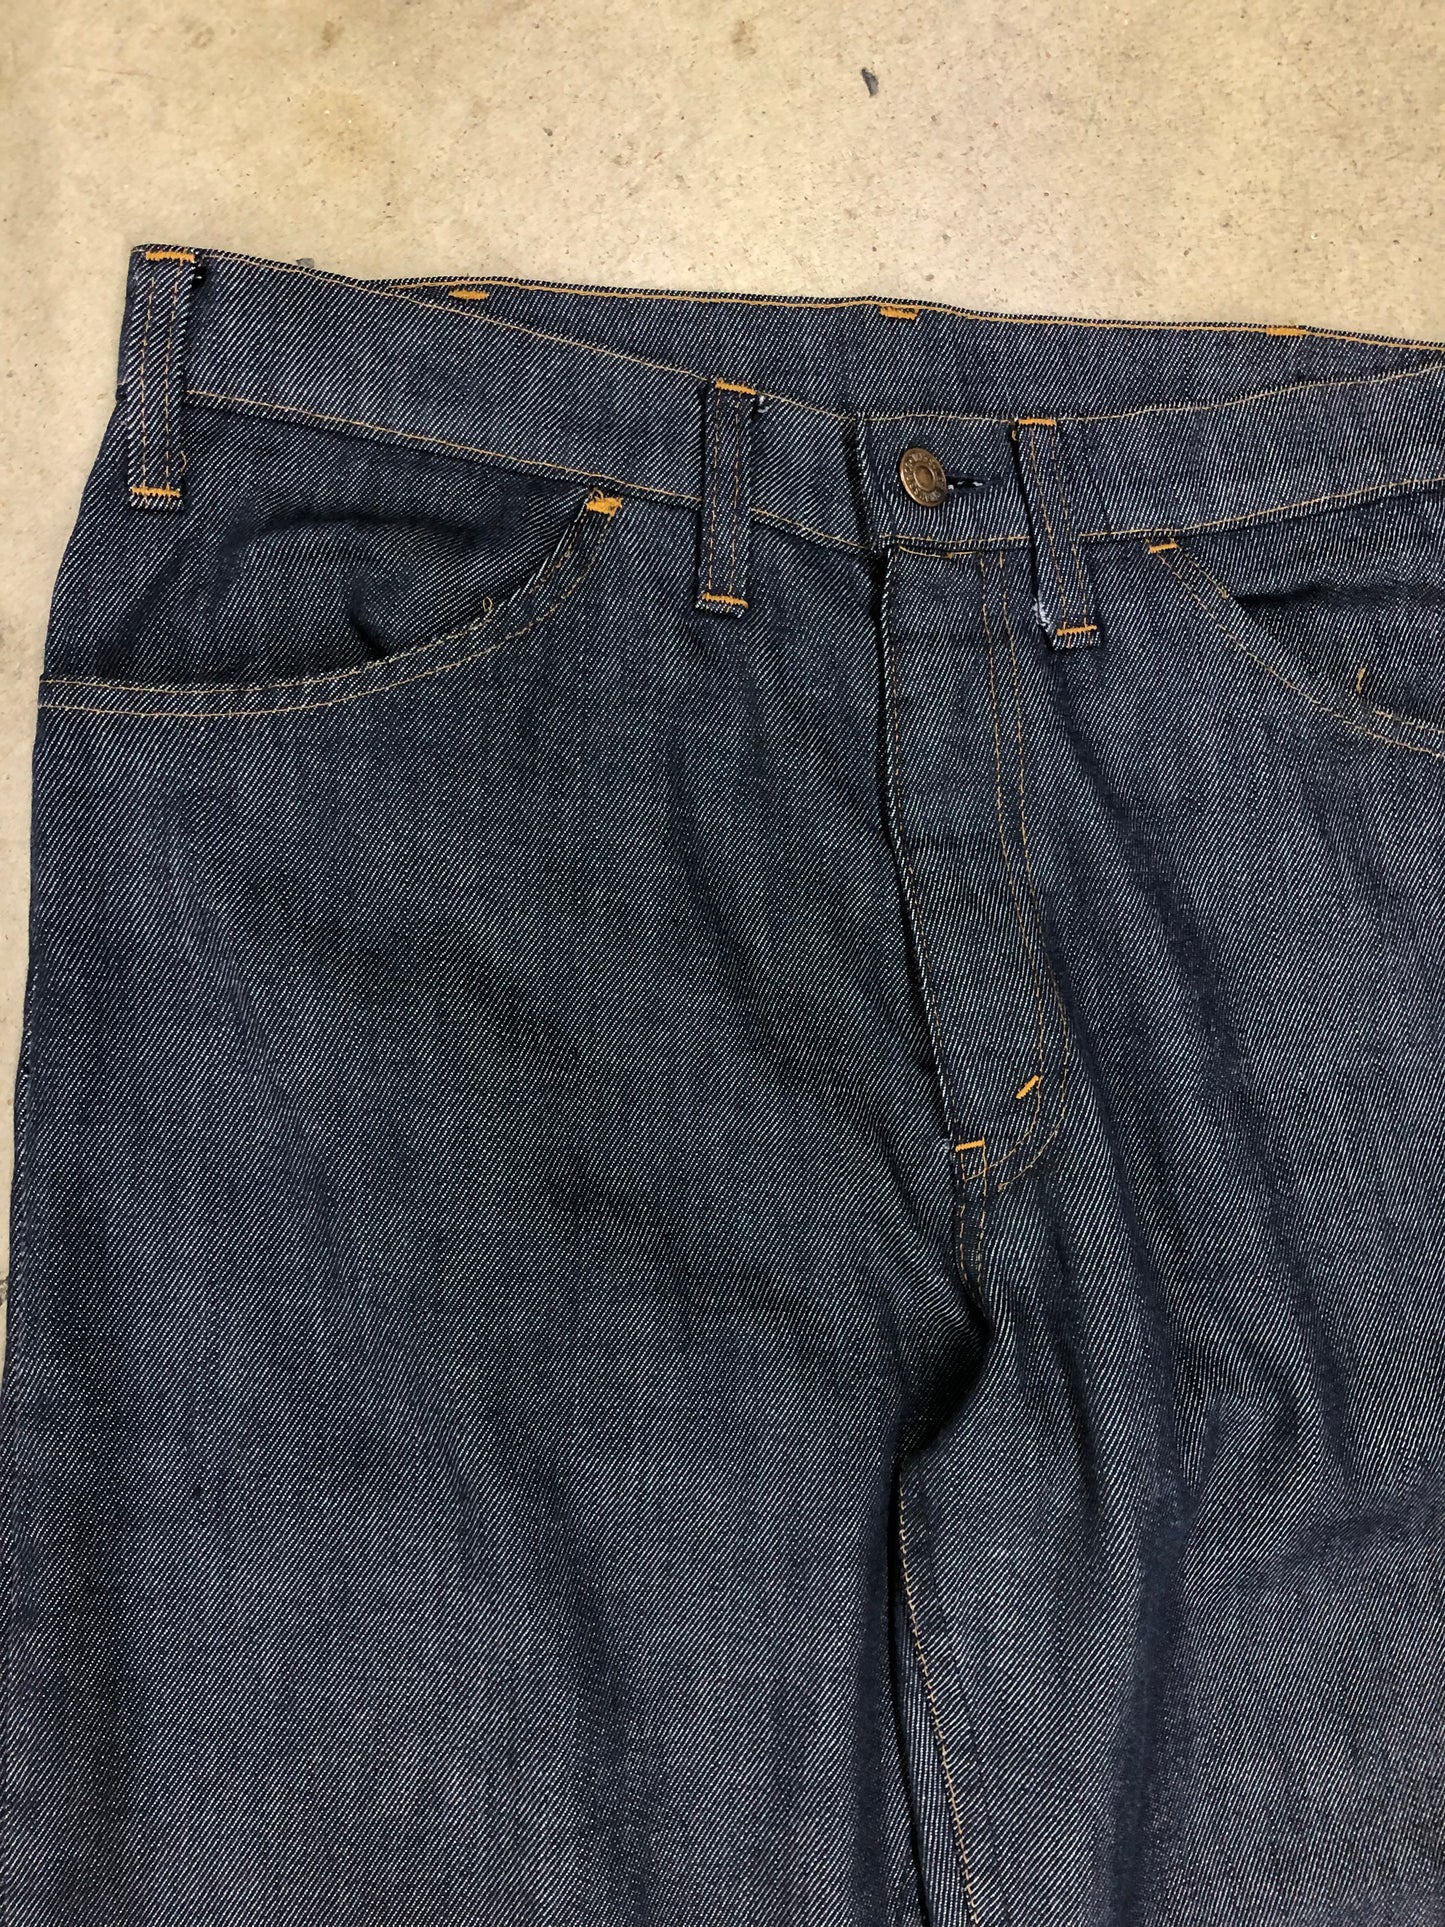 VTG Levi's 70's Big E Dark Wash Flare Cutoff Trousers Sz 32x28